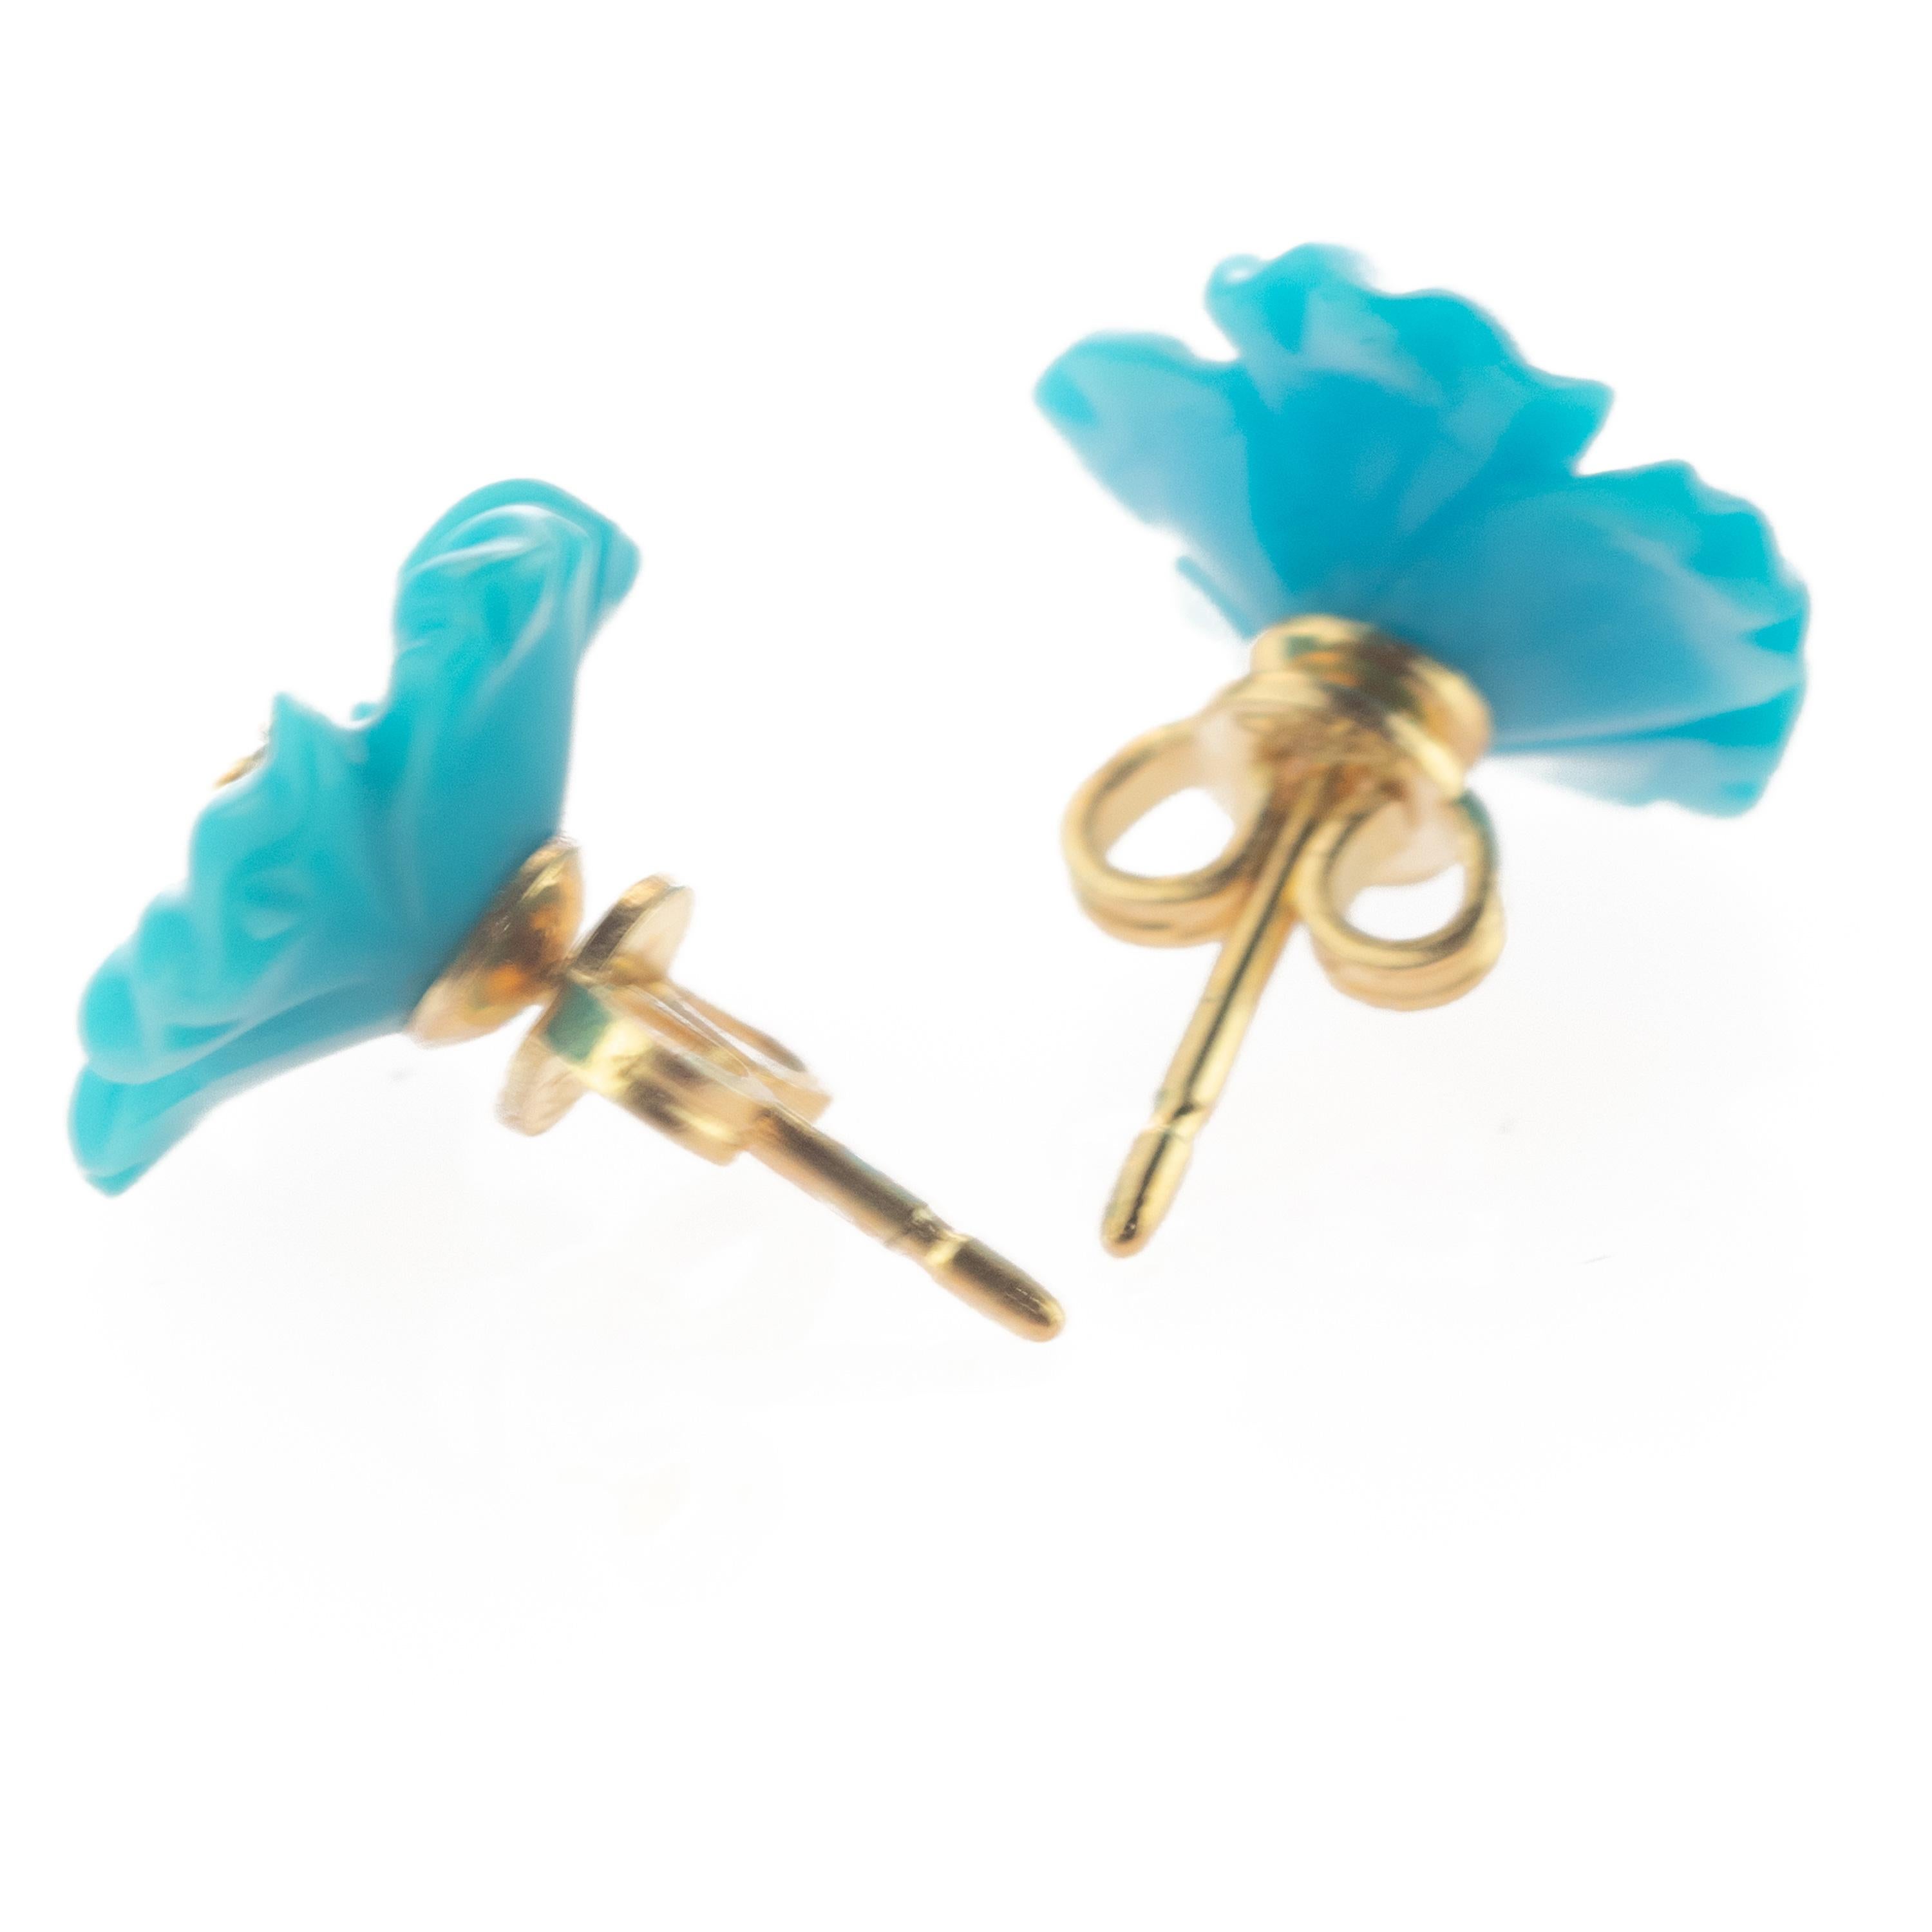 turquoise flower stud earrings